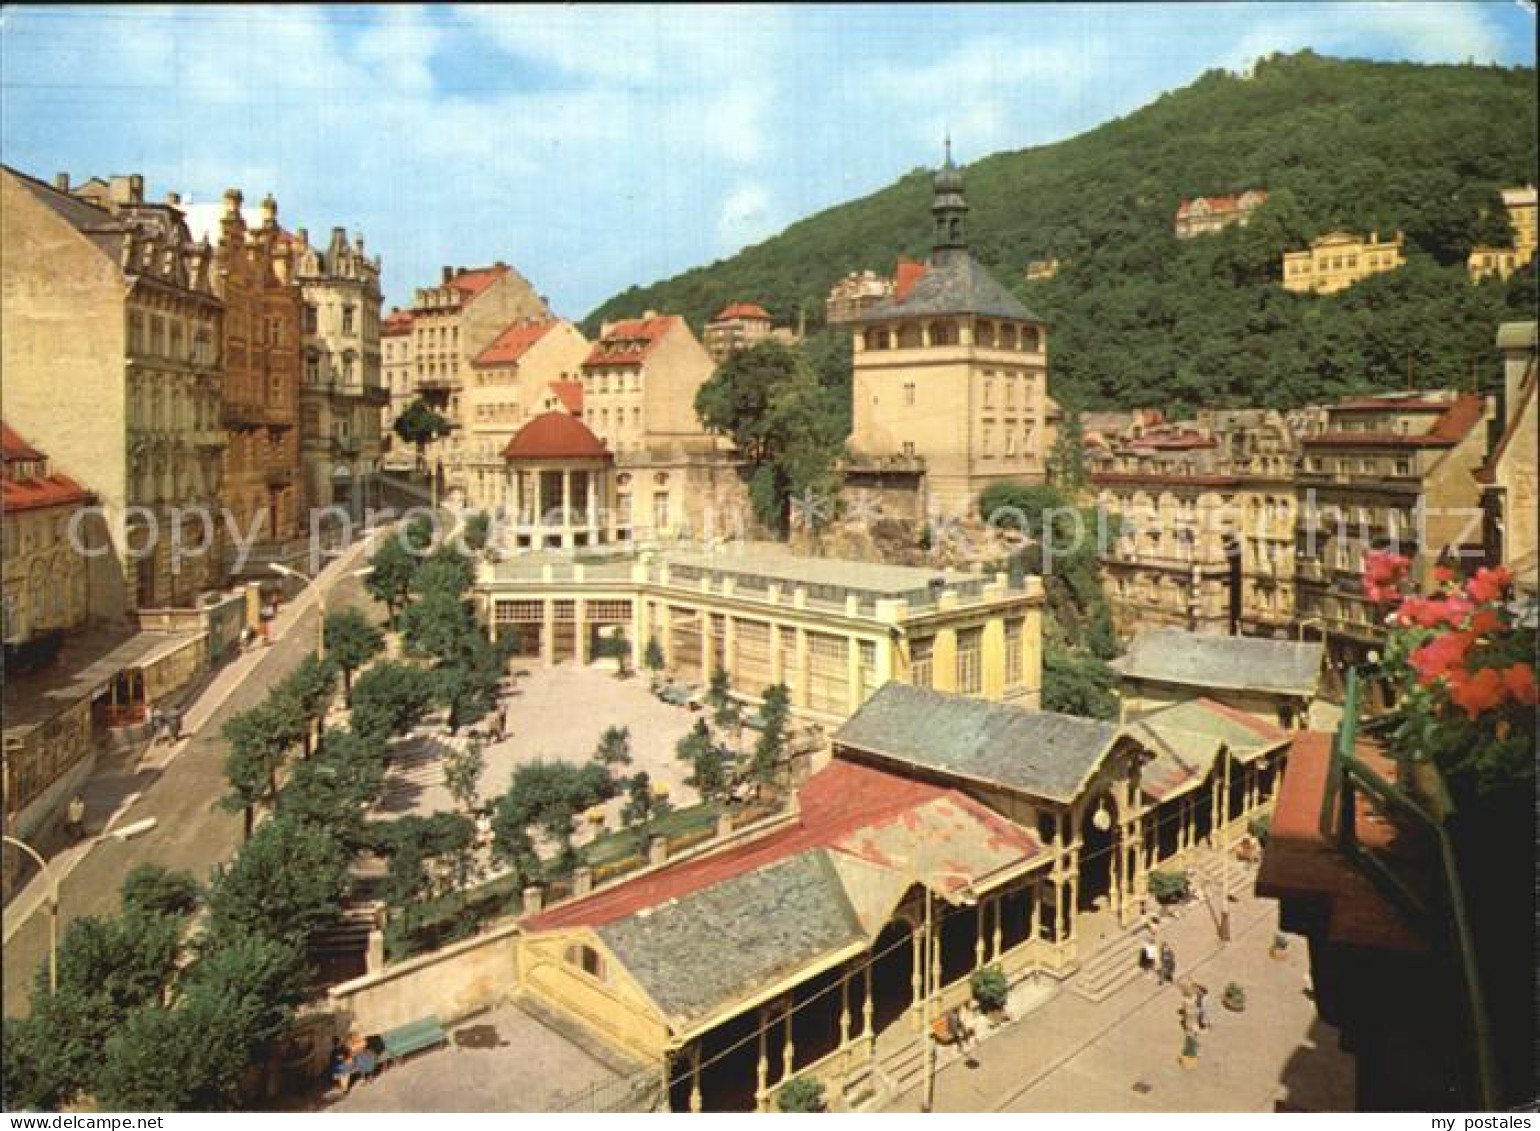 72508619 Karlovy Vary Trzni Kolonada Marktkolonnade  - Czech Republic